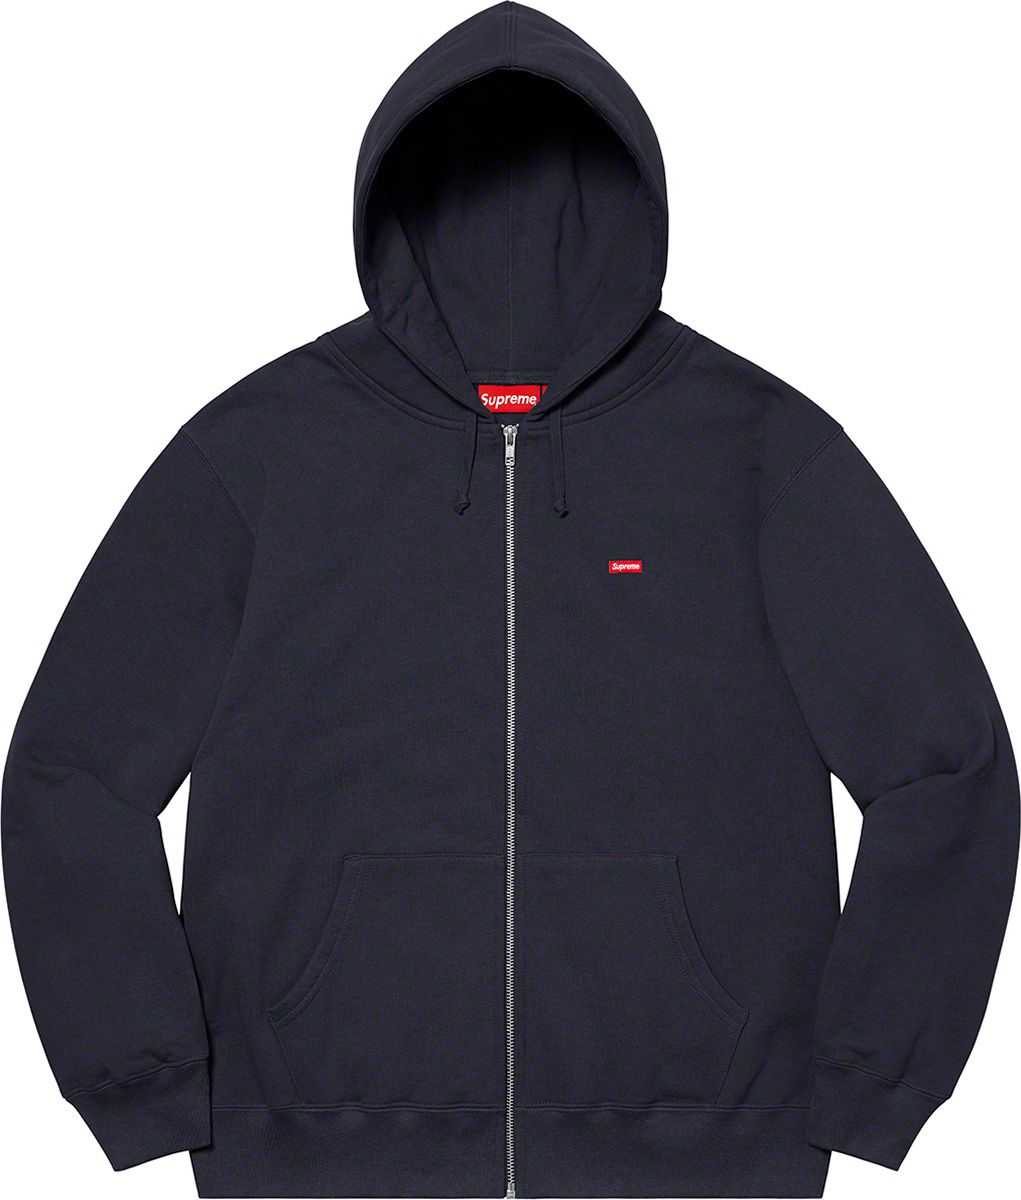 Laser Cut S Logo Hooded Sweatshirt - Supreme